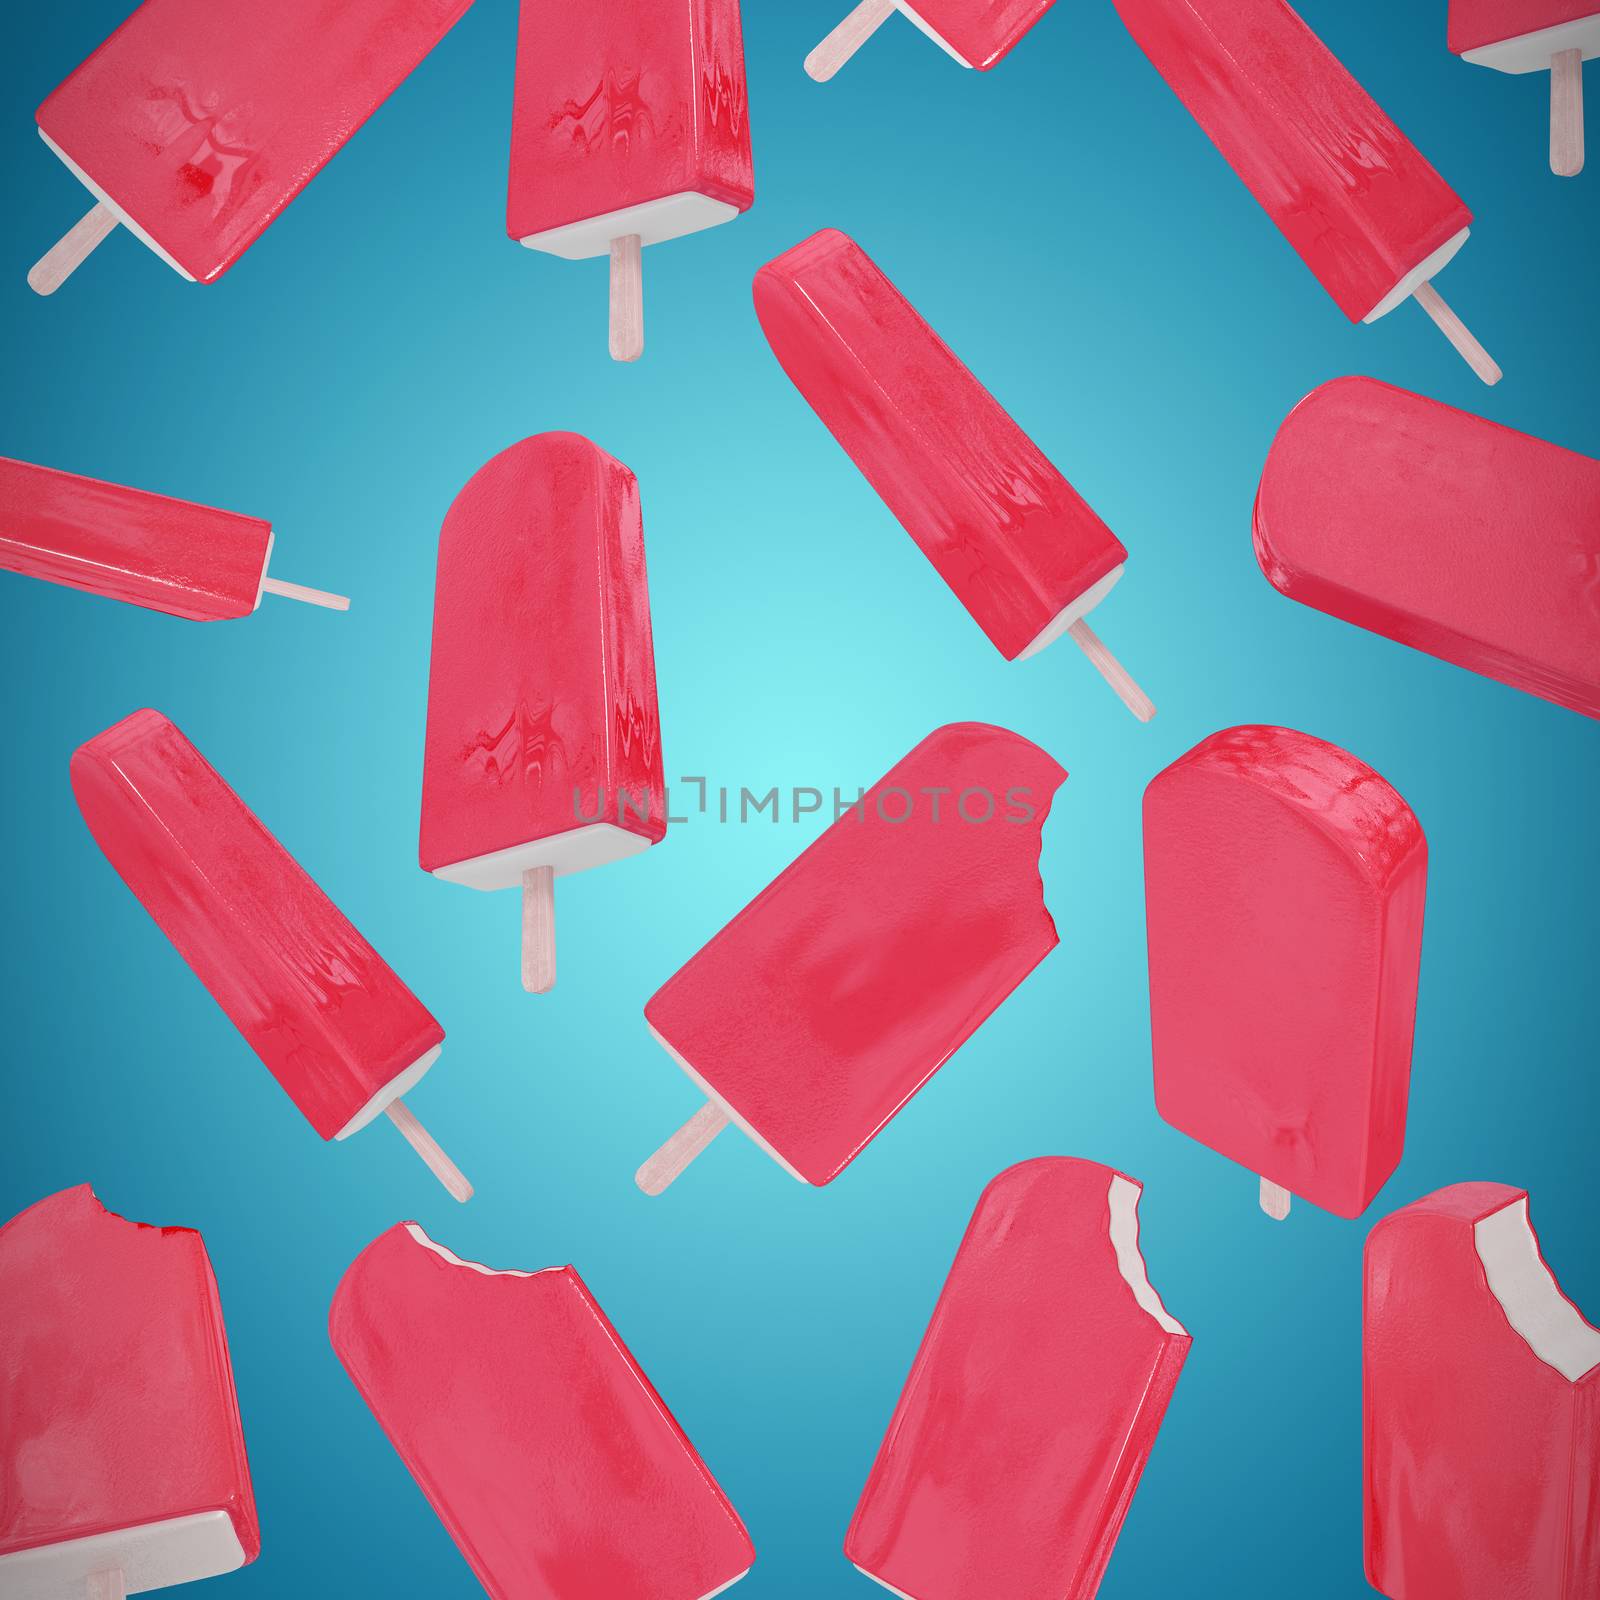 Composite image of pink ice-cream by Wavebreakmedia